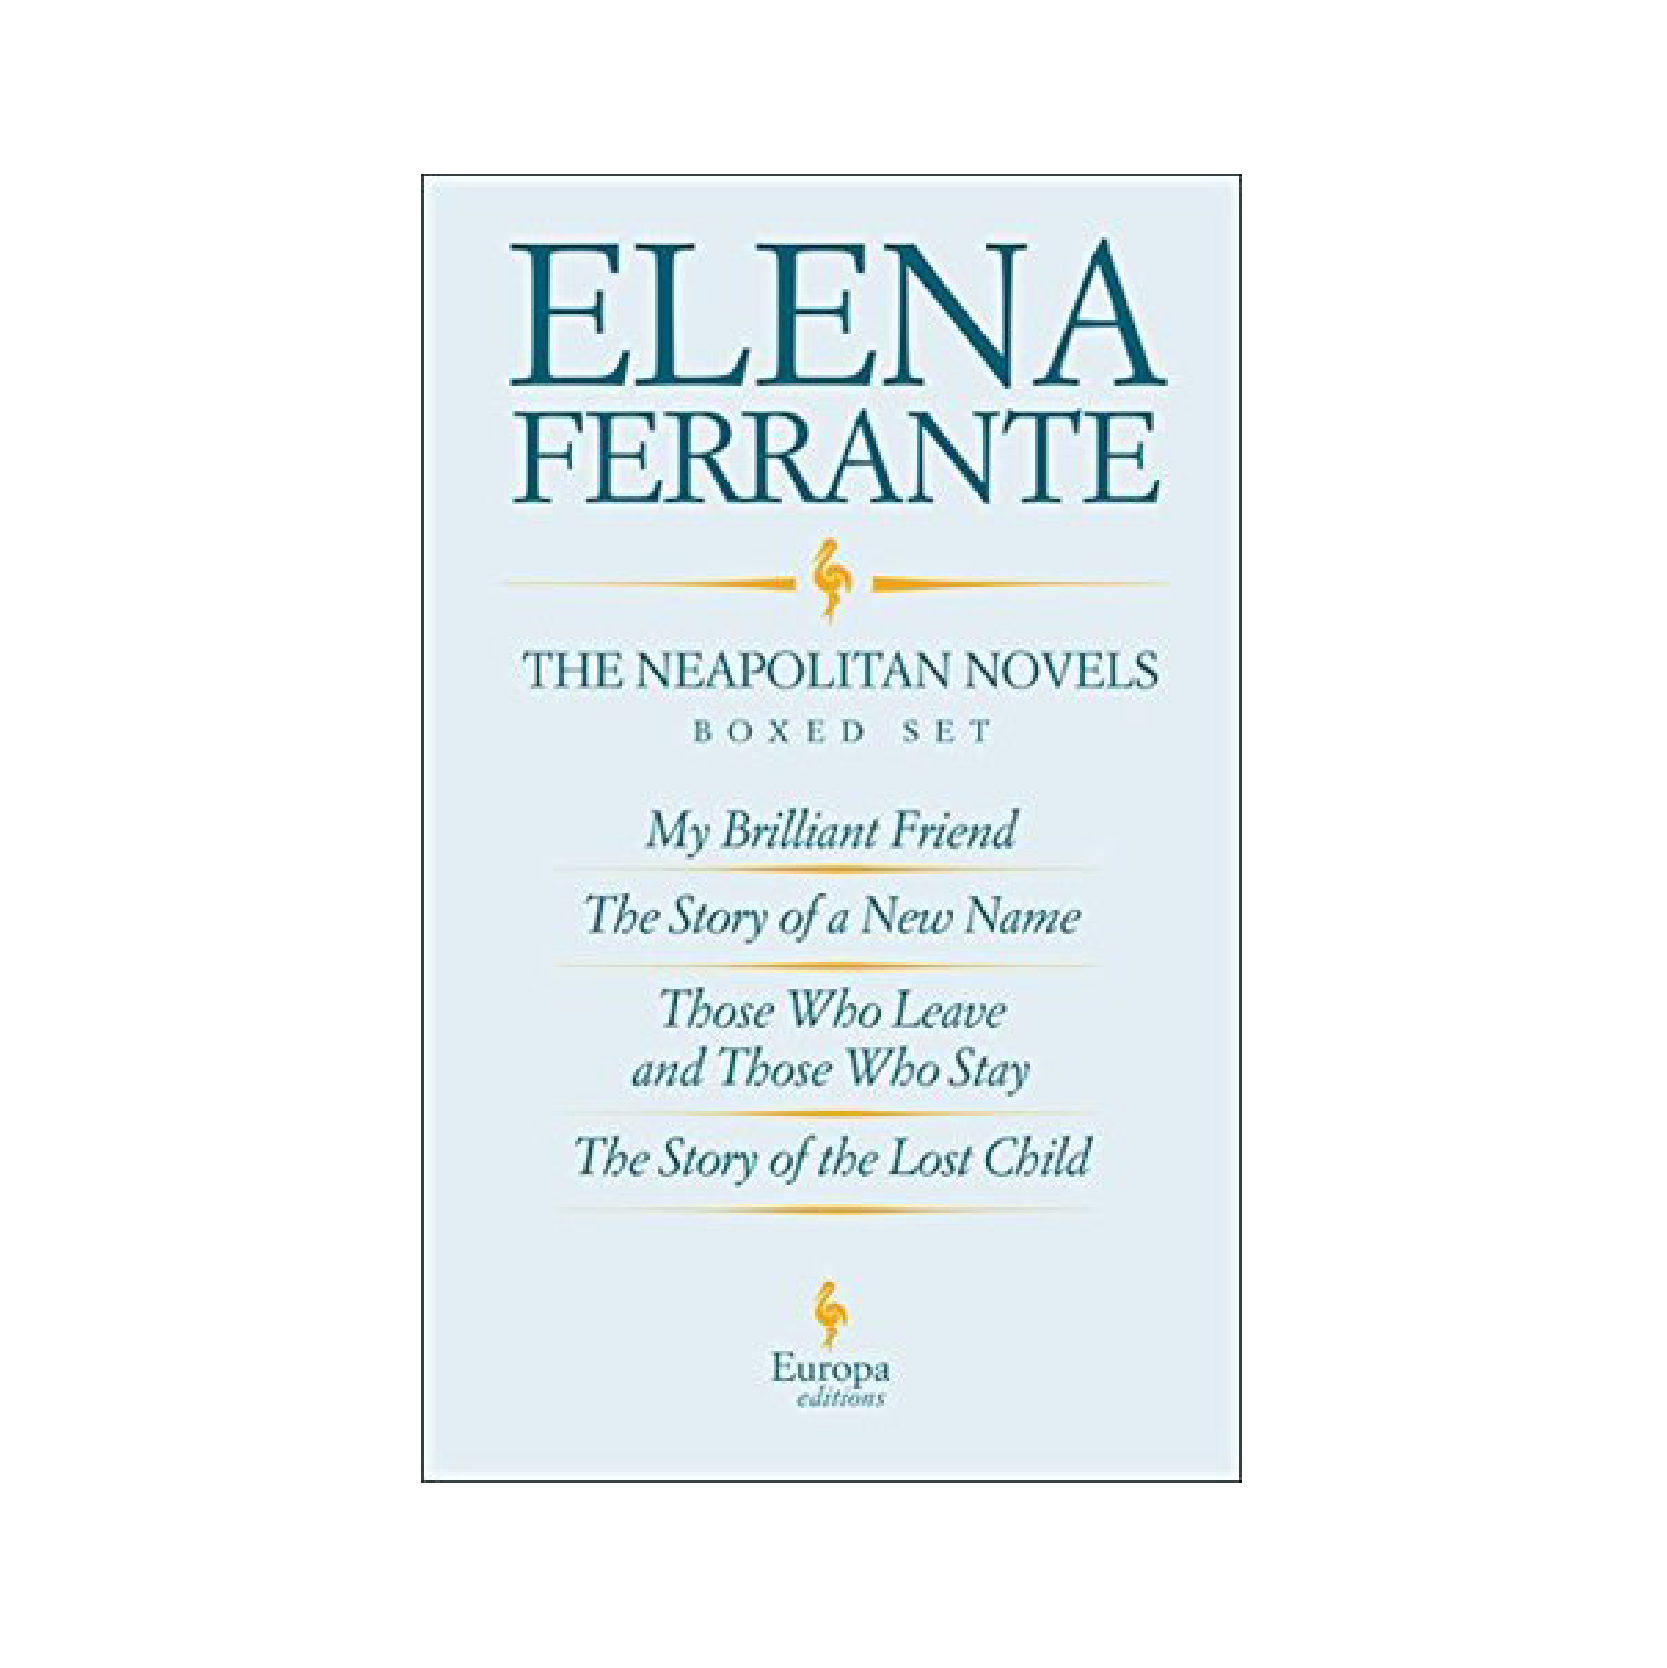 “The Neapolitan novels” by Elena Ferrante